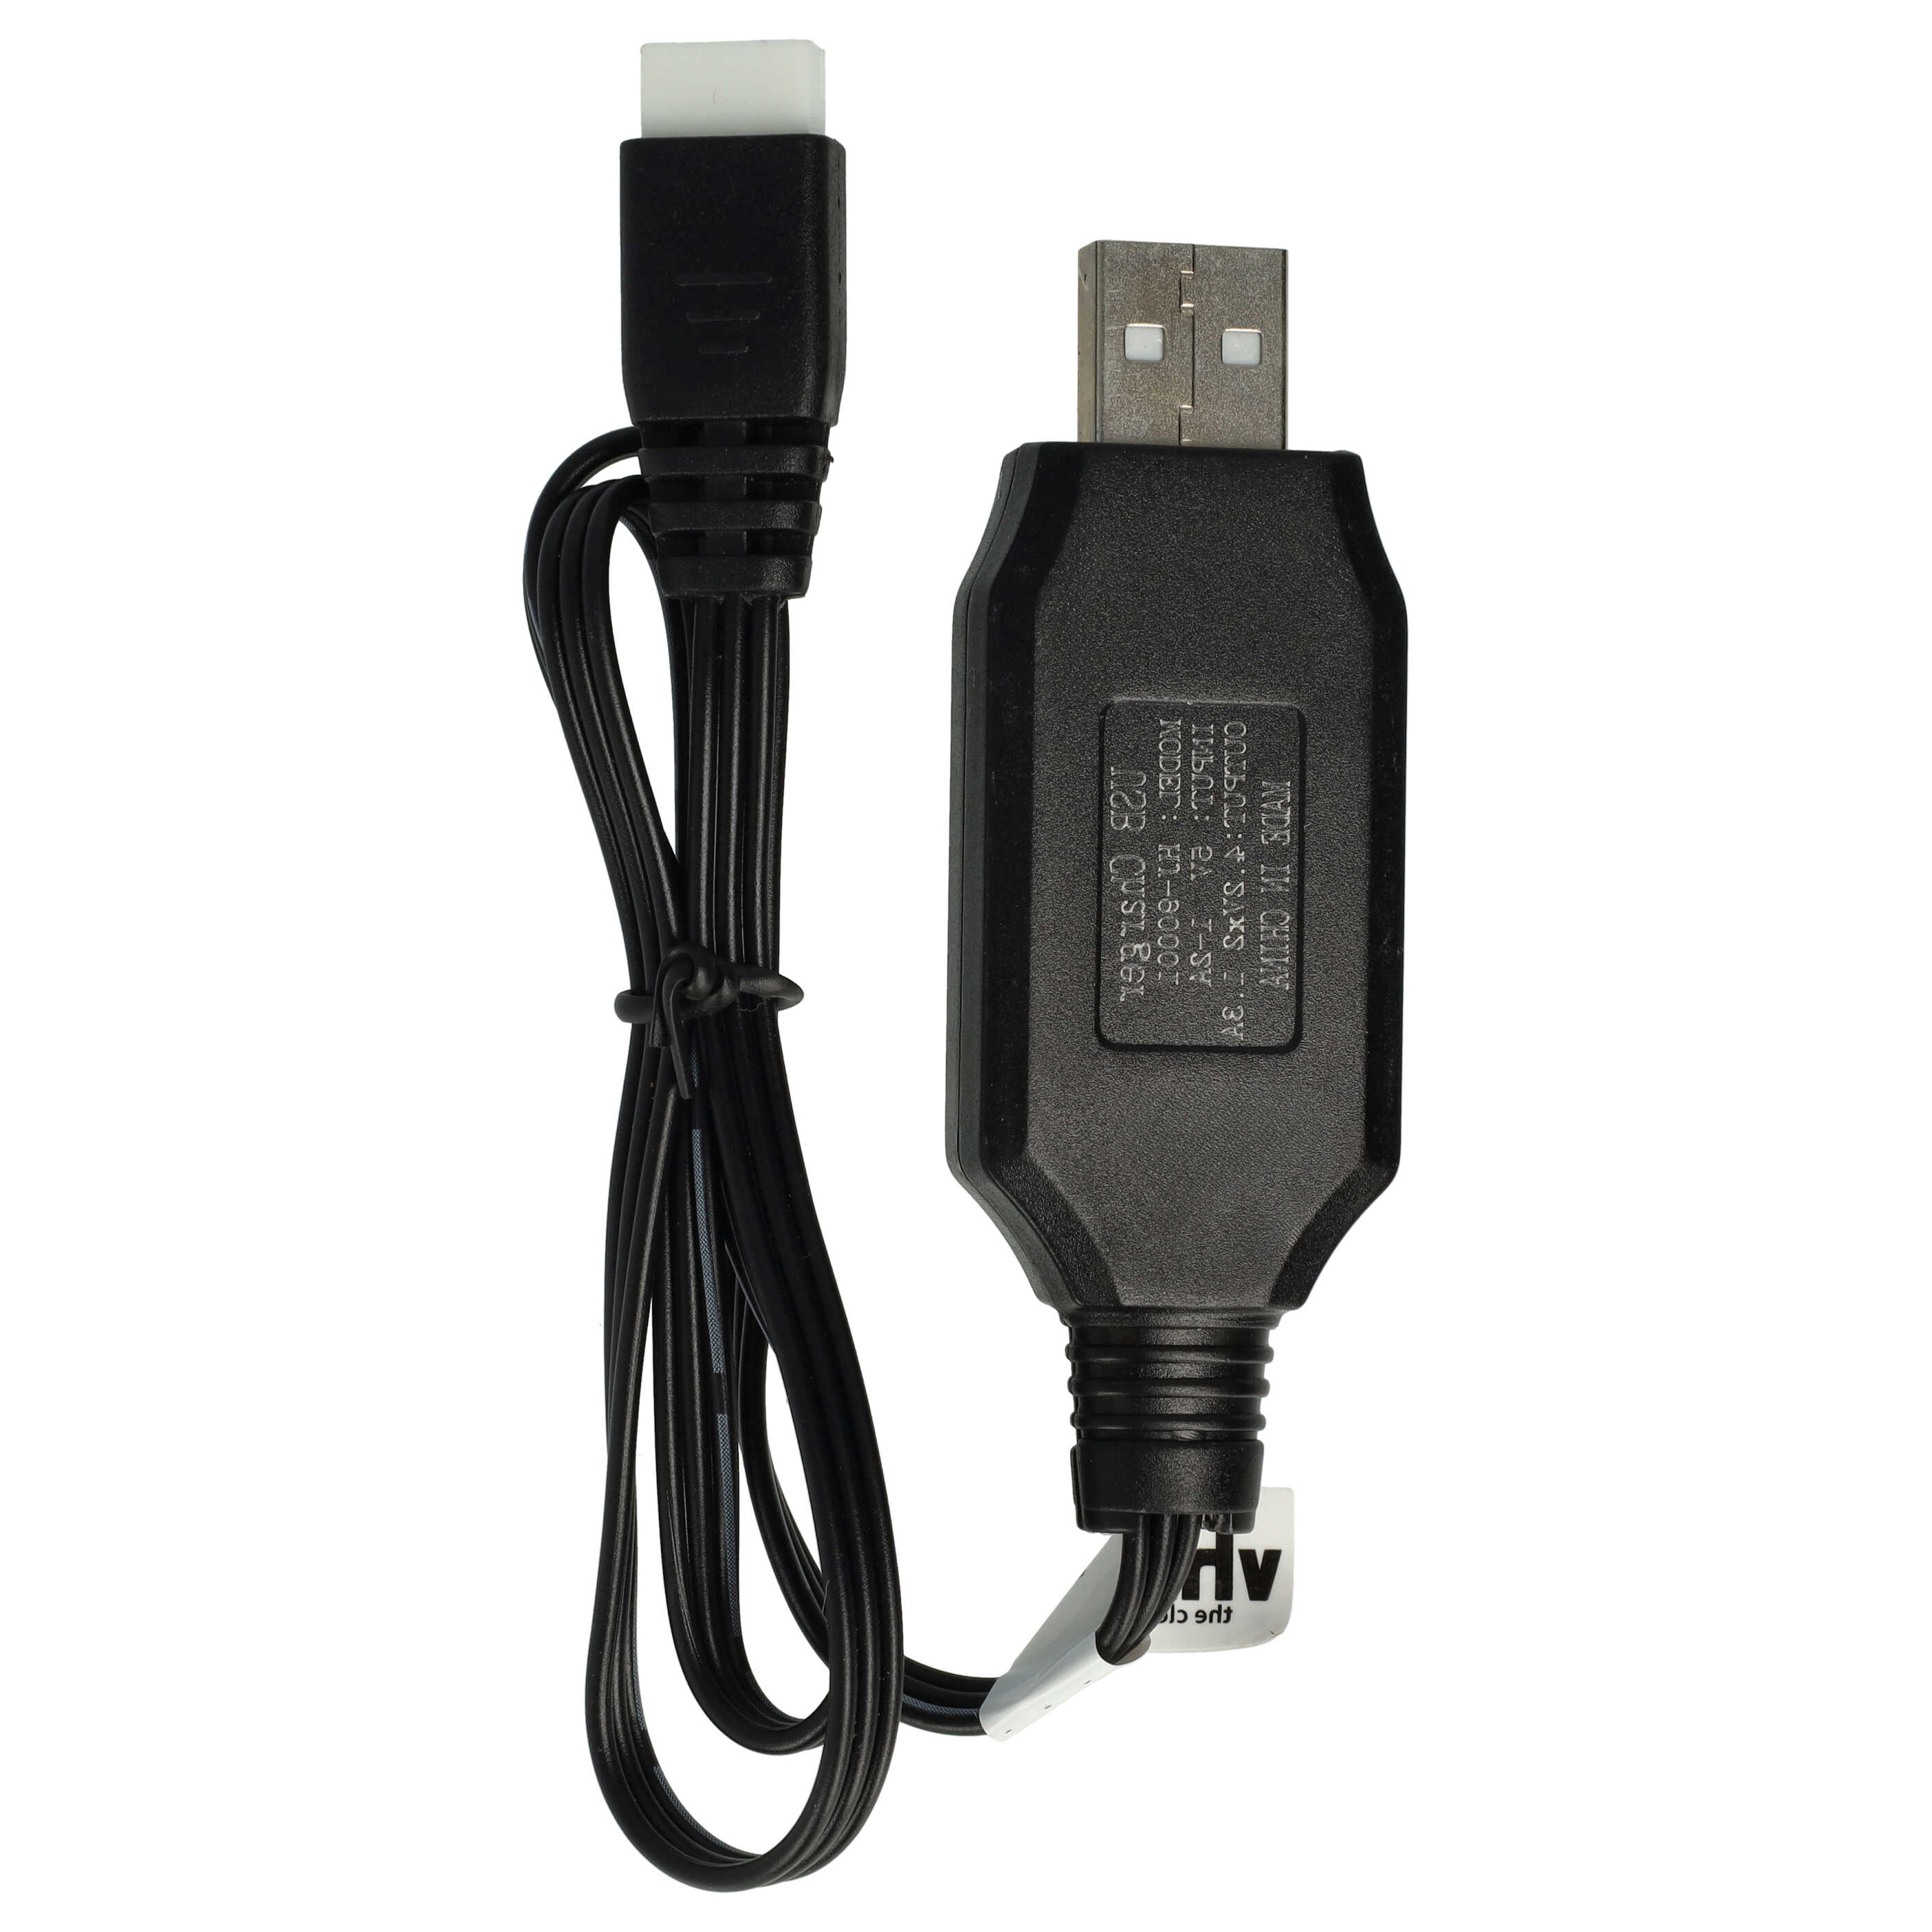 USB-Ladekabel passend für RC-Akkus mit JST XH-3P-Anschluss, RC-Modellbau Akkupacks - 60cm 4,2V